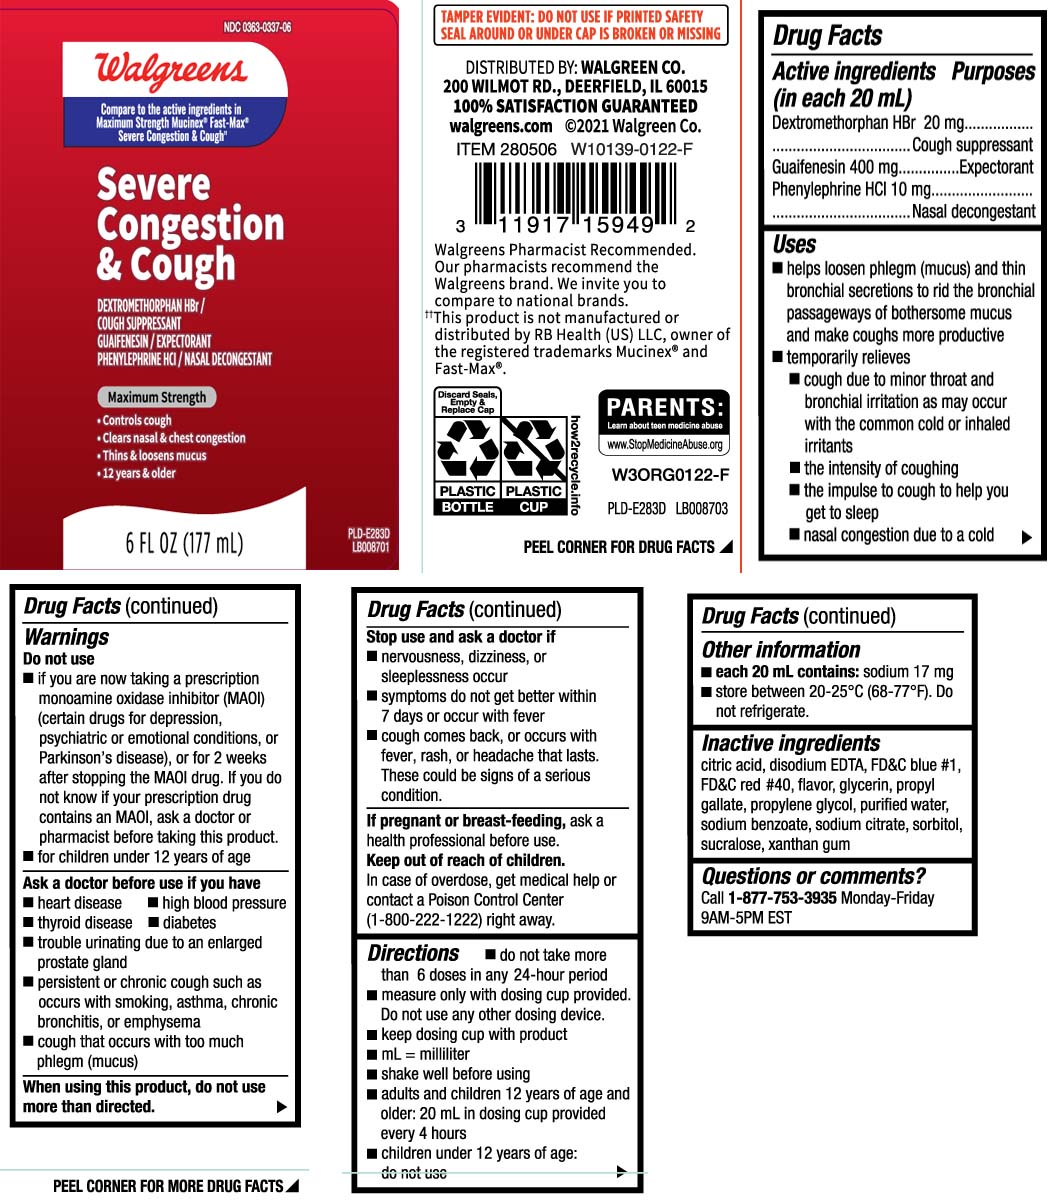 Dextromethorphan HBR 20 mg, Guaifenesin 400 mg, Phenylephrine HCl 10 mg